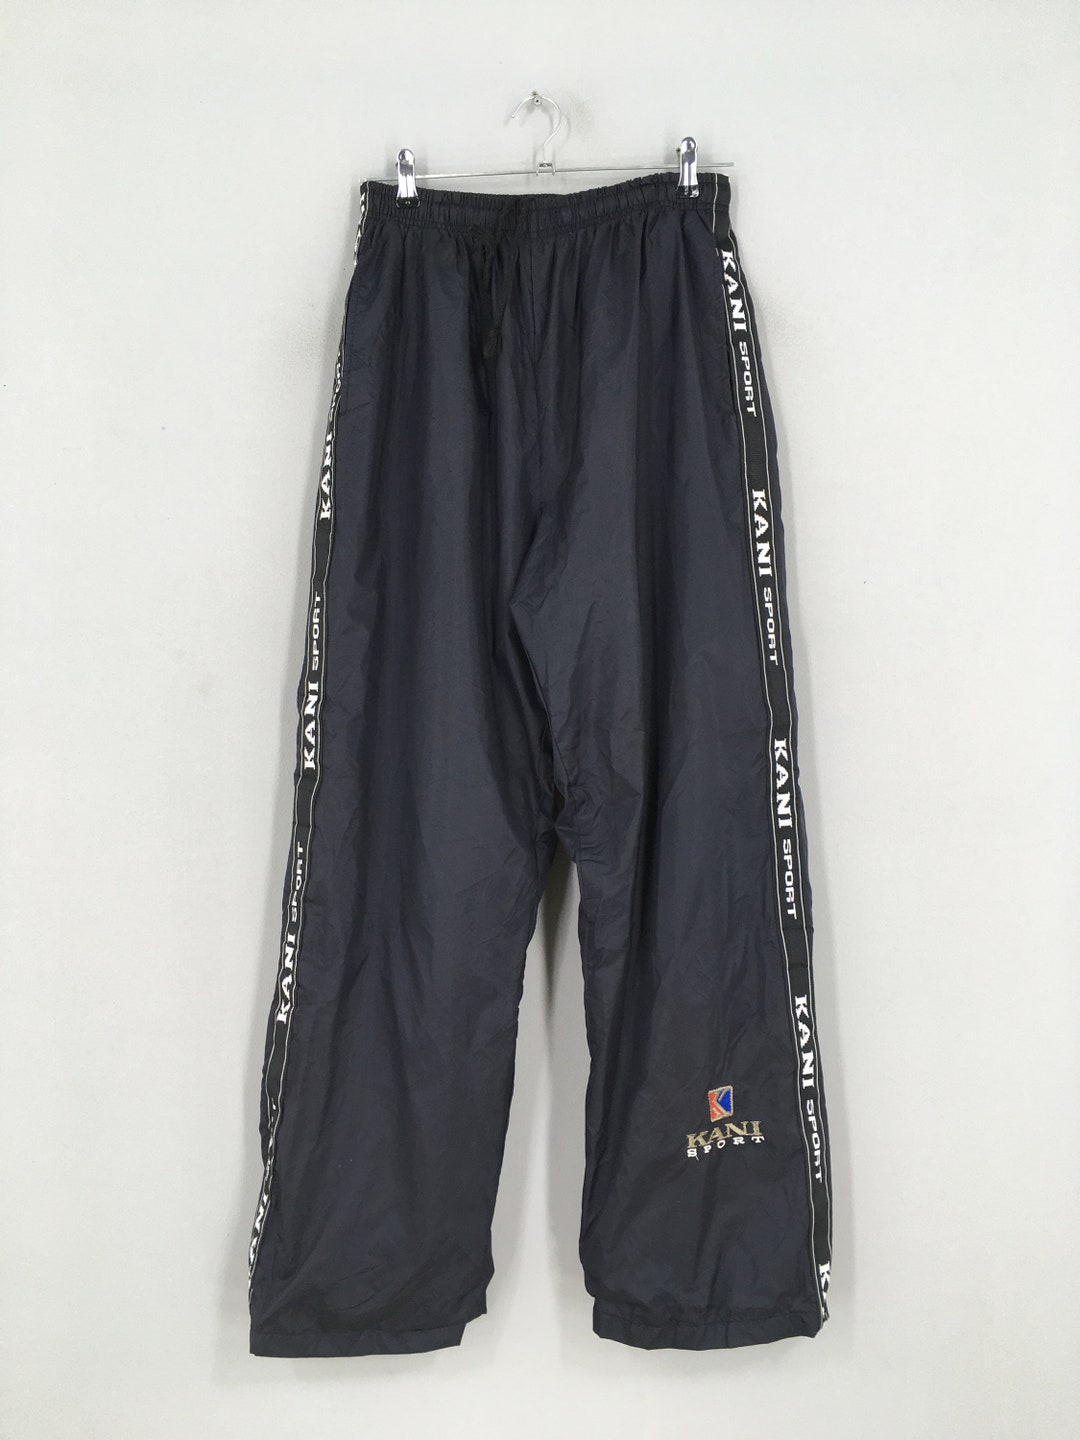 Vintage Karl Kani Sport Tracksuit Pants Black 90's Kani - Etsy